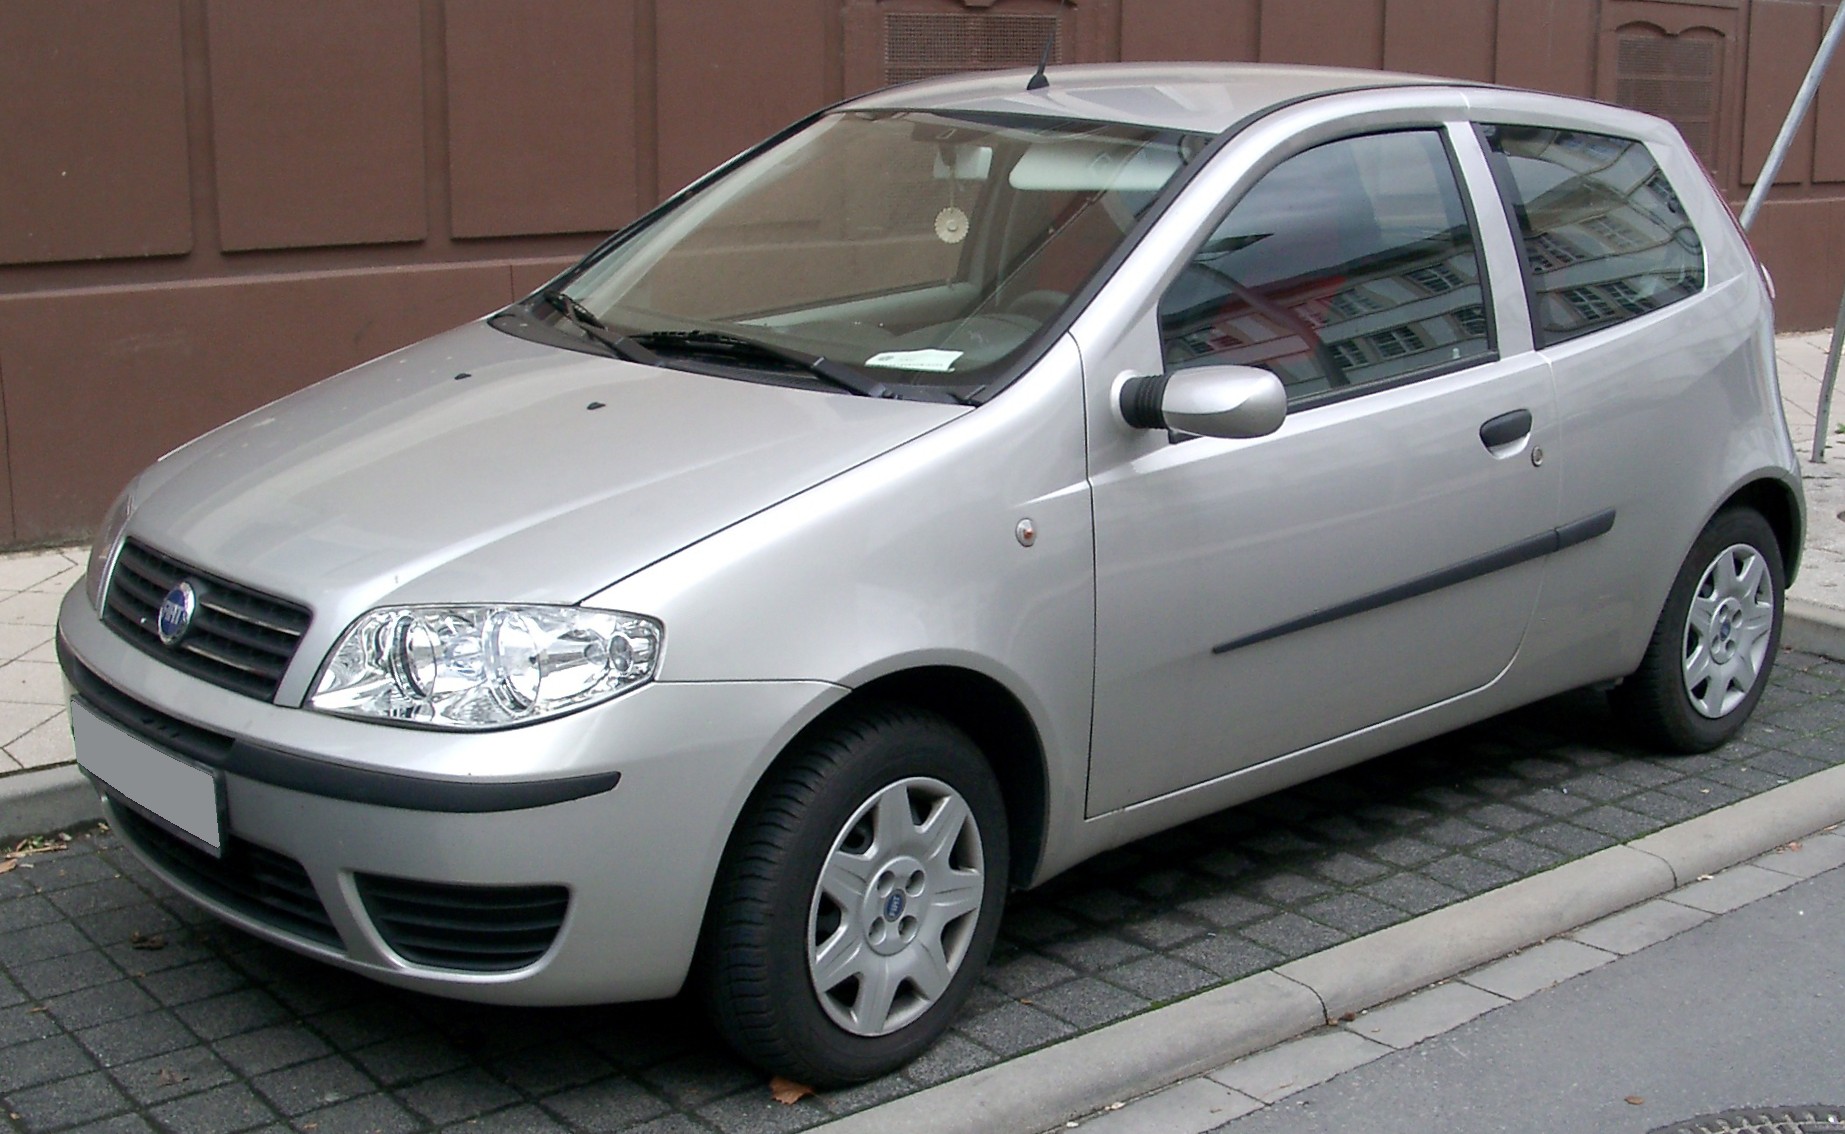 File:Fiat Grande Punto 20090402 front.JPG - Wikimedia Commons